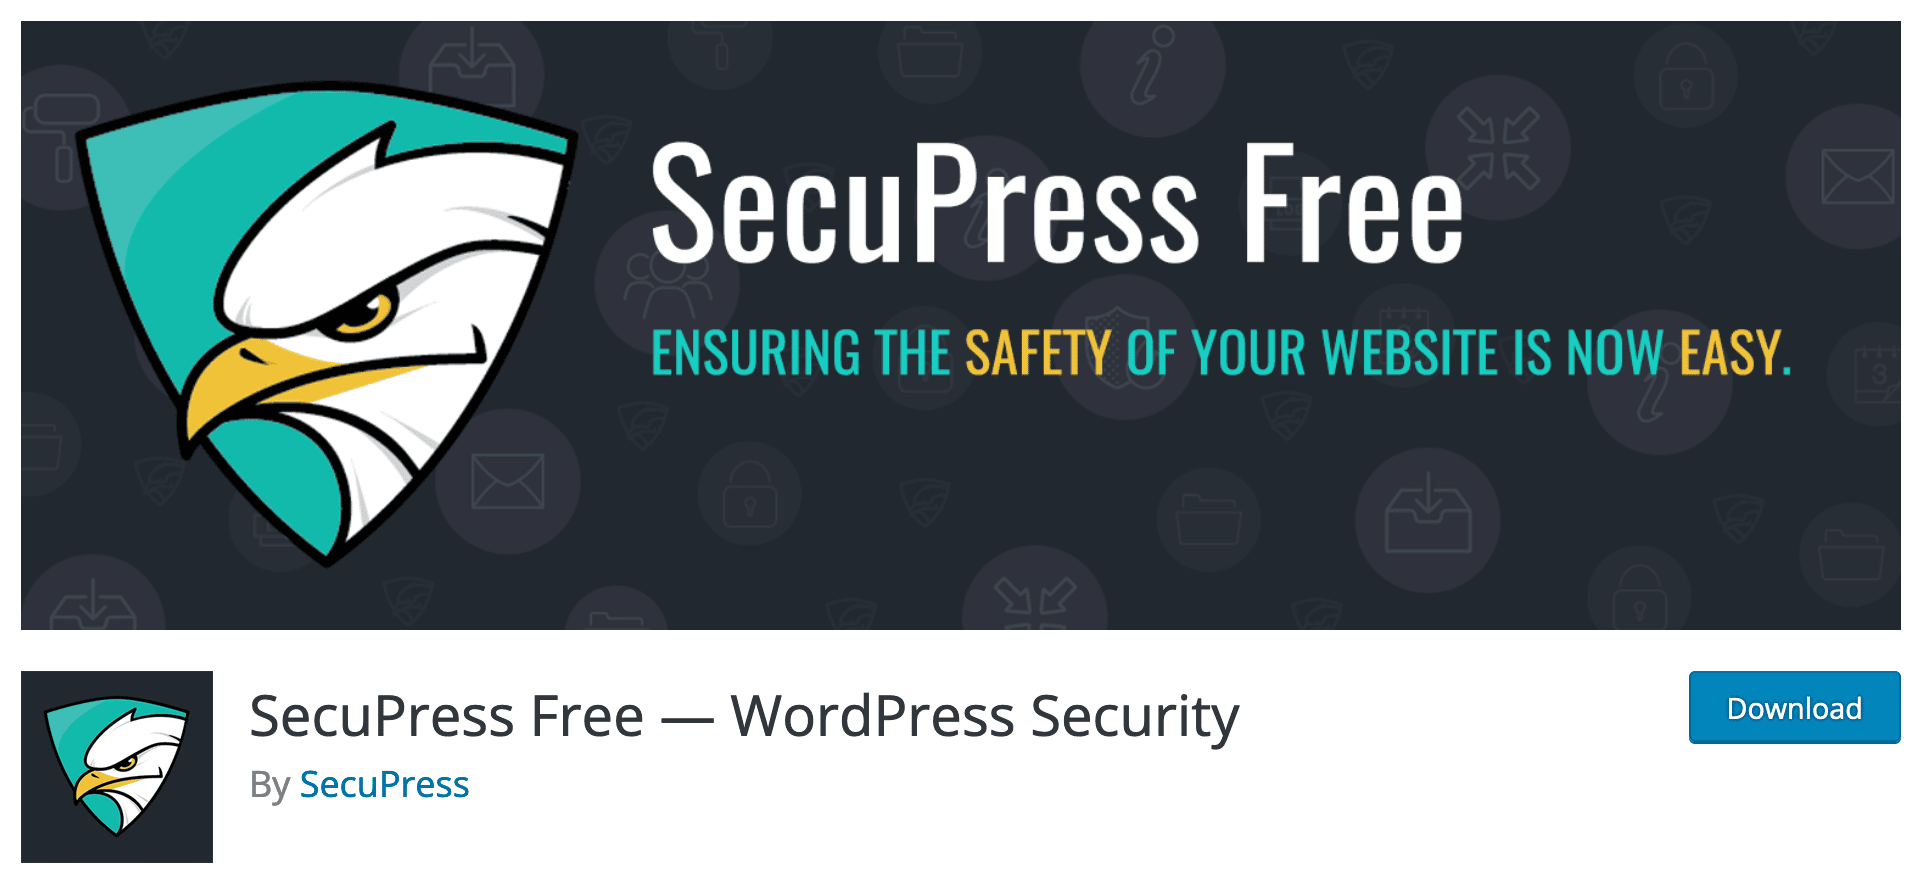 SecuPress is a WordPress security plugin.